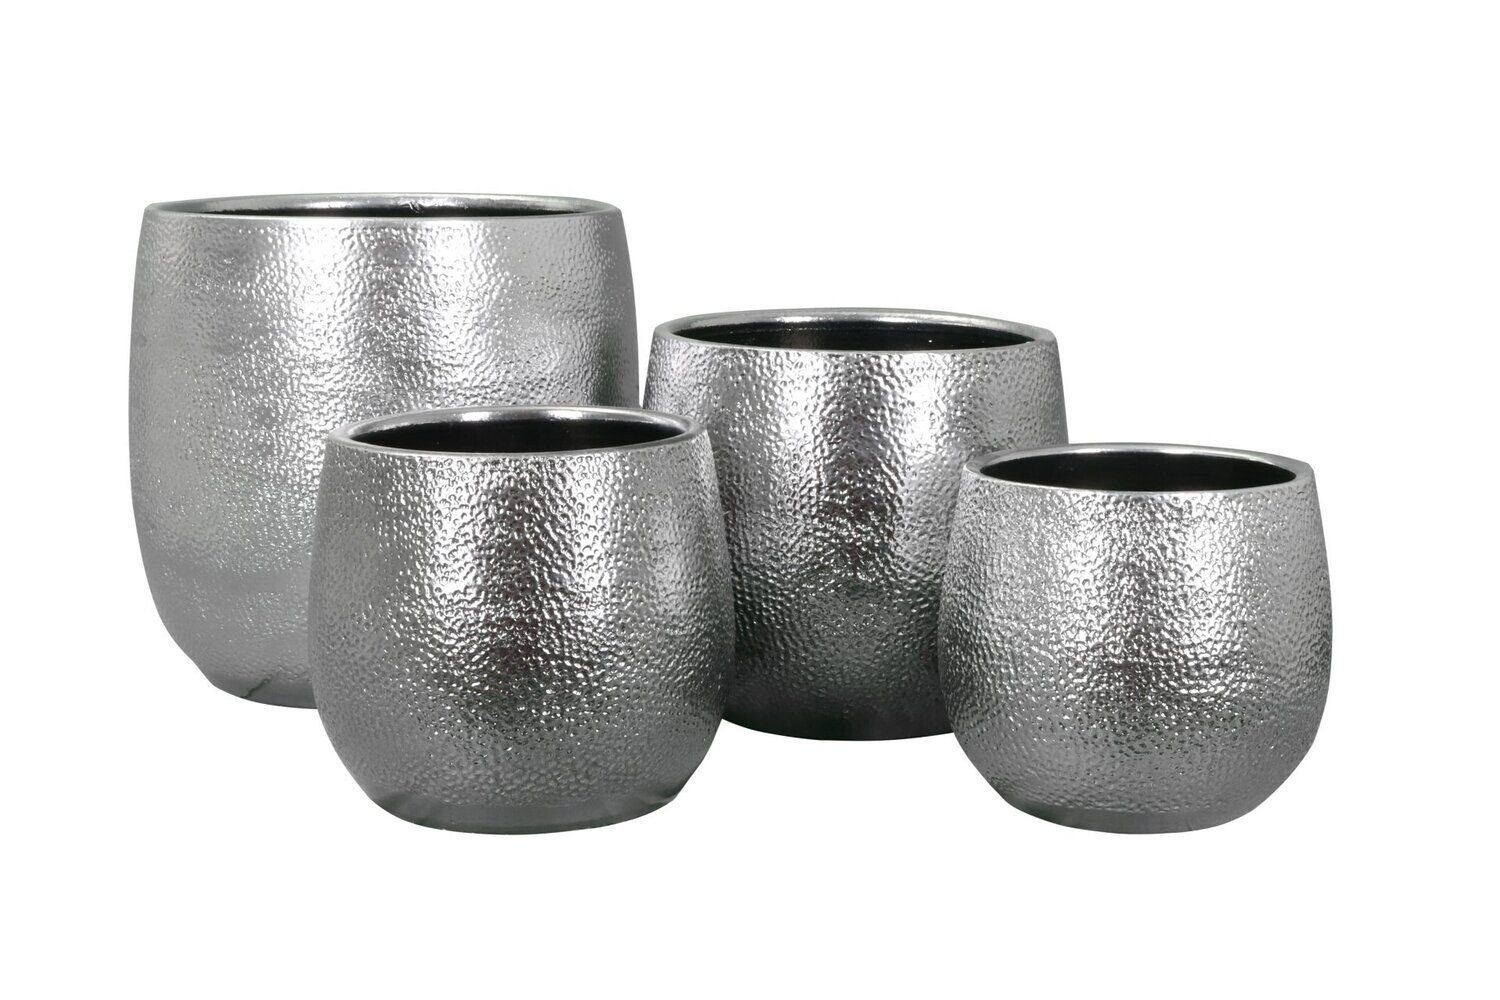 tegawo Silber, in 3er-Set Hammerschlagoptik Portugal Luxus-Keramik Übertopf in handgefertigt